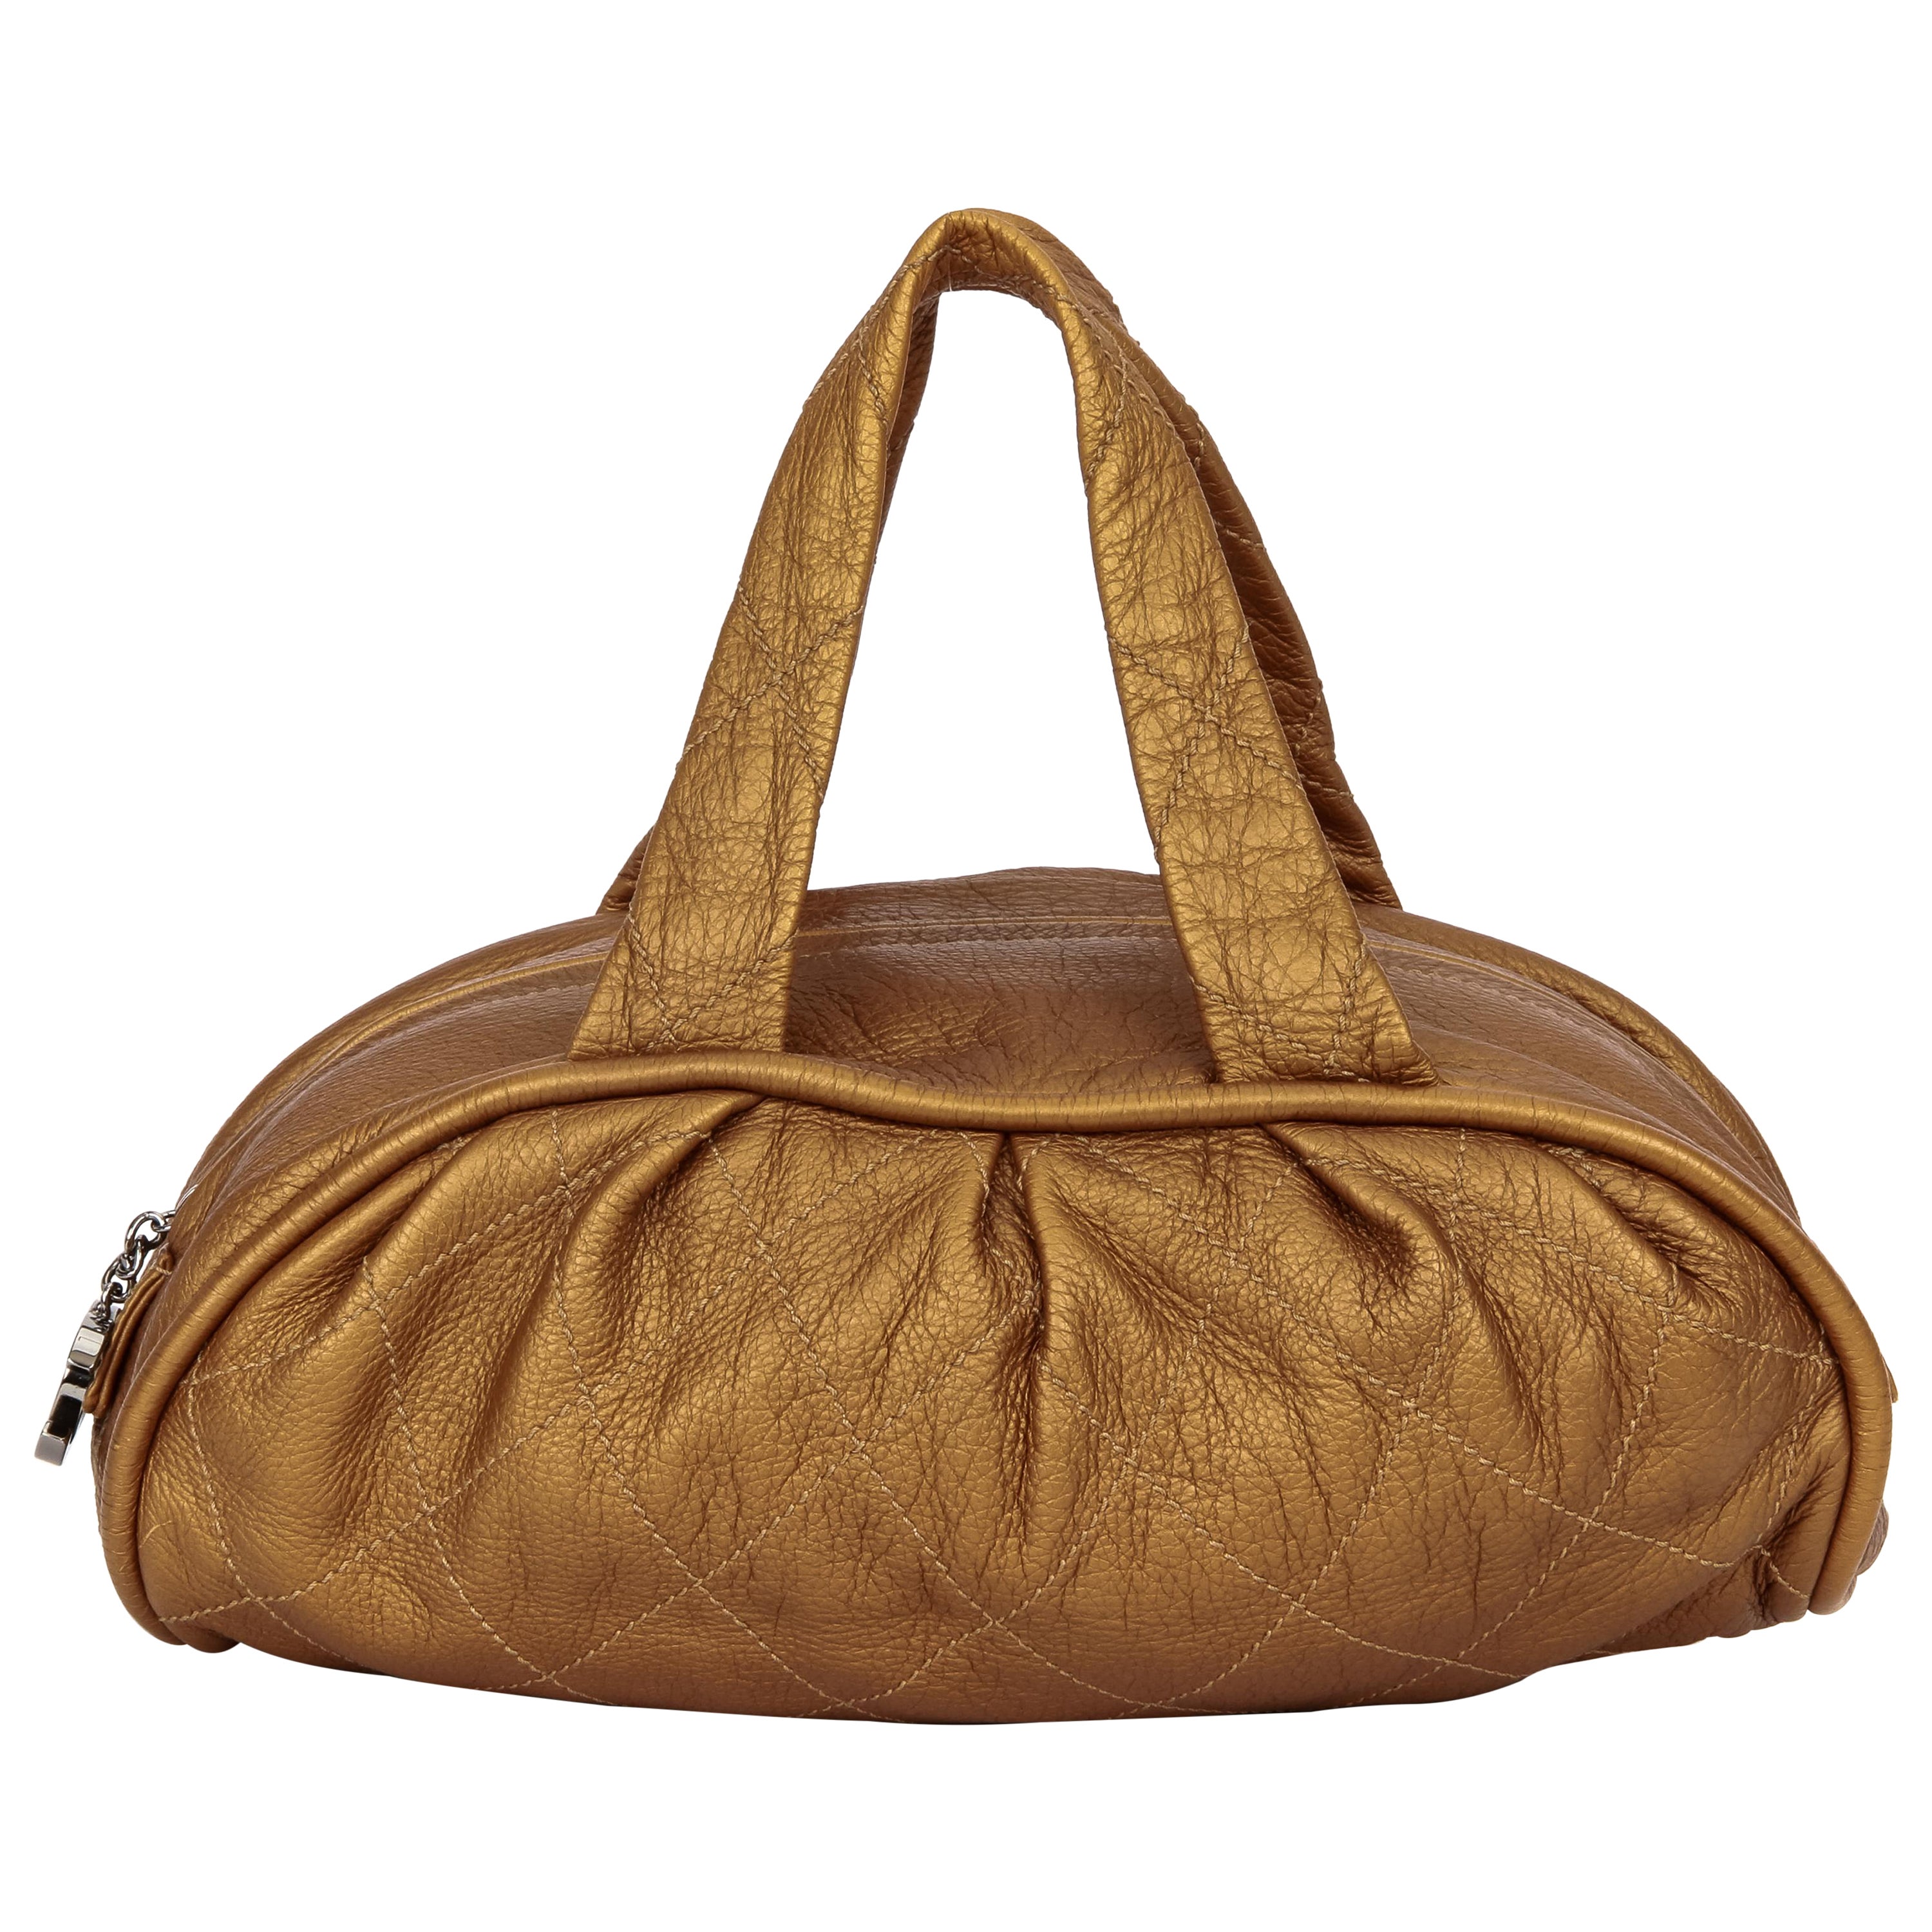 Chanel Le Marais Bronze Soft Leather Handbag